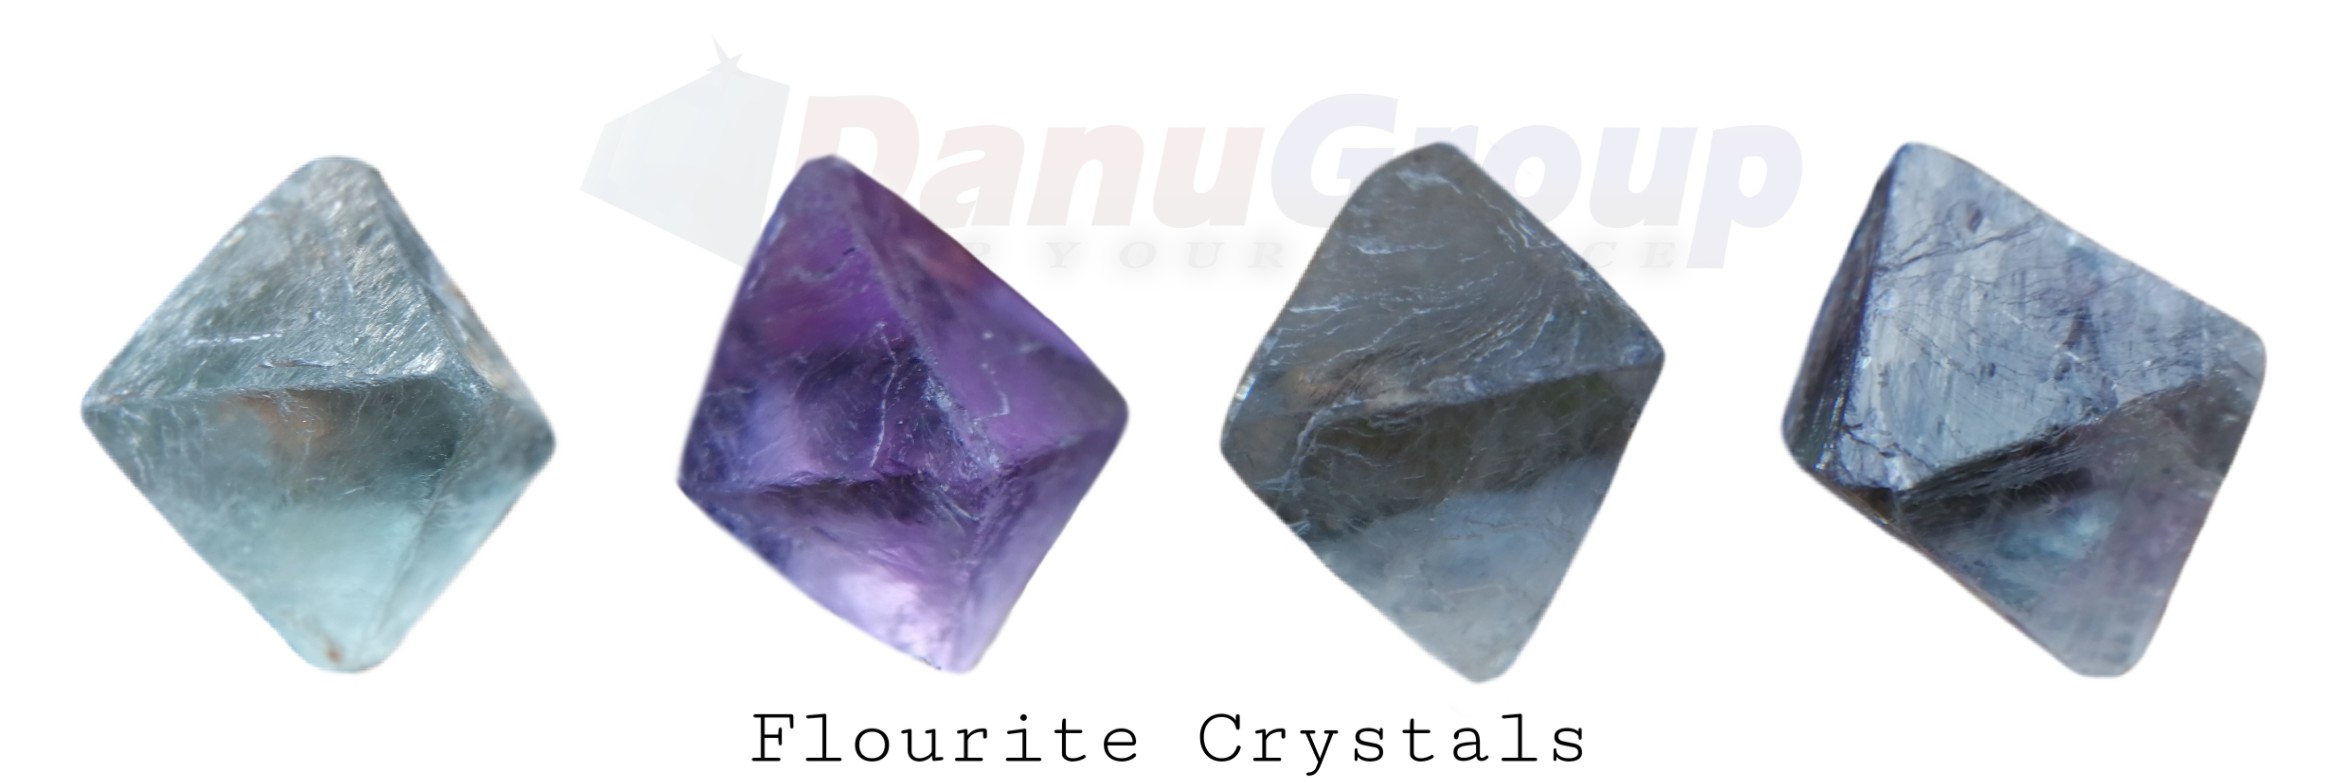 Natural Flourite Crystals